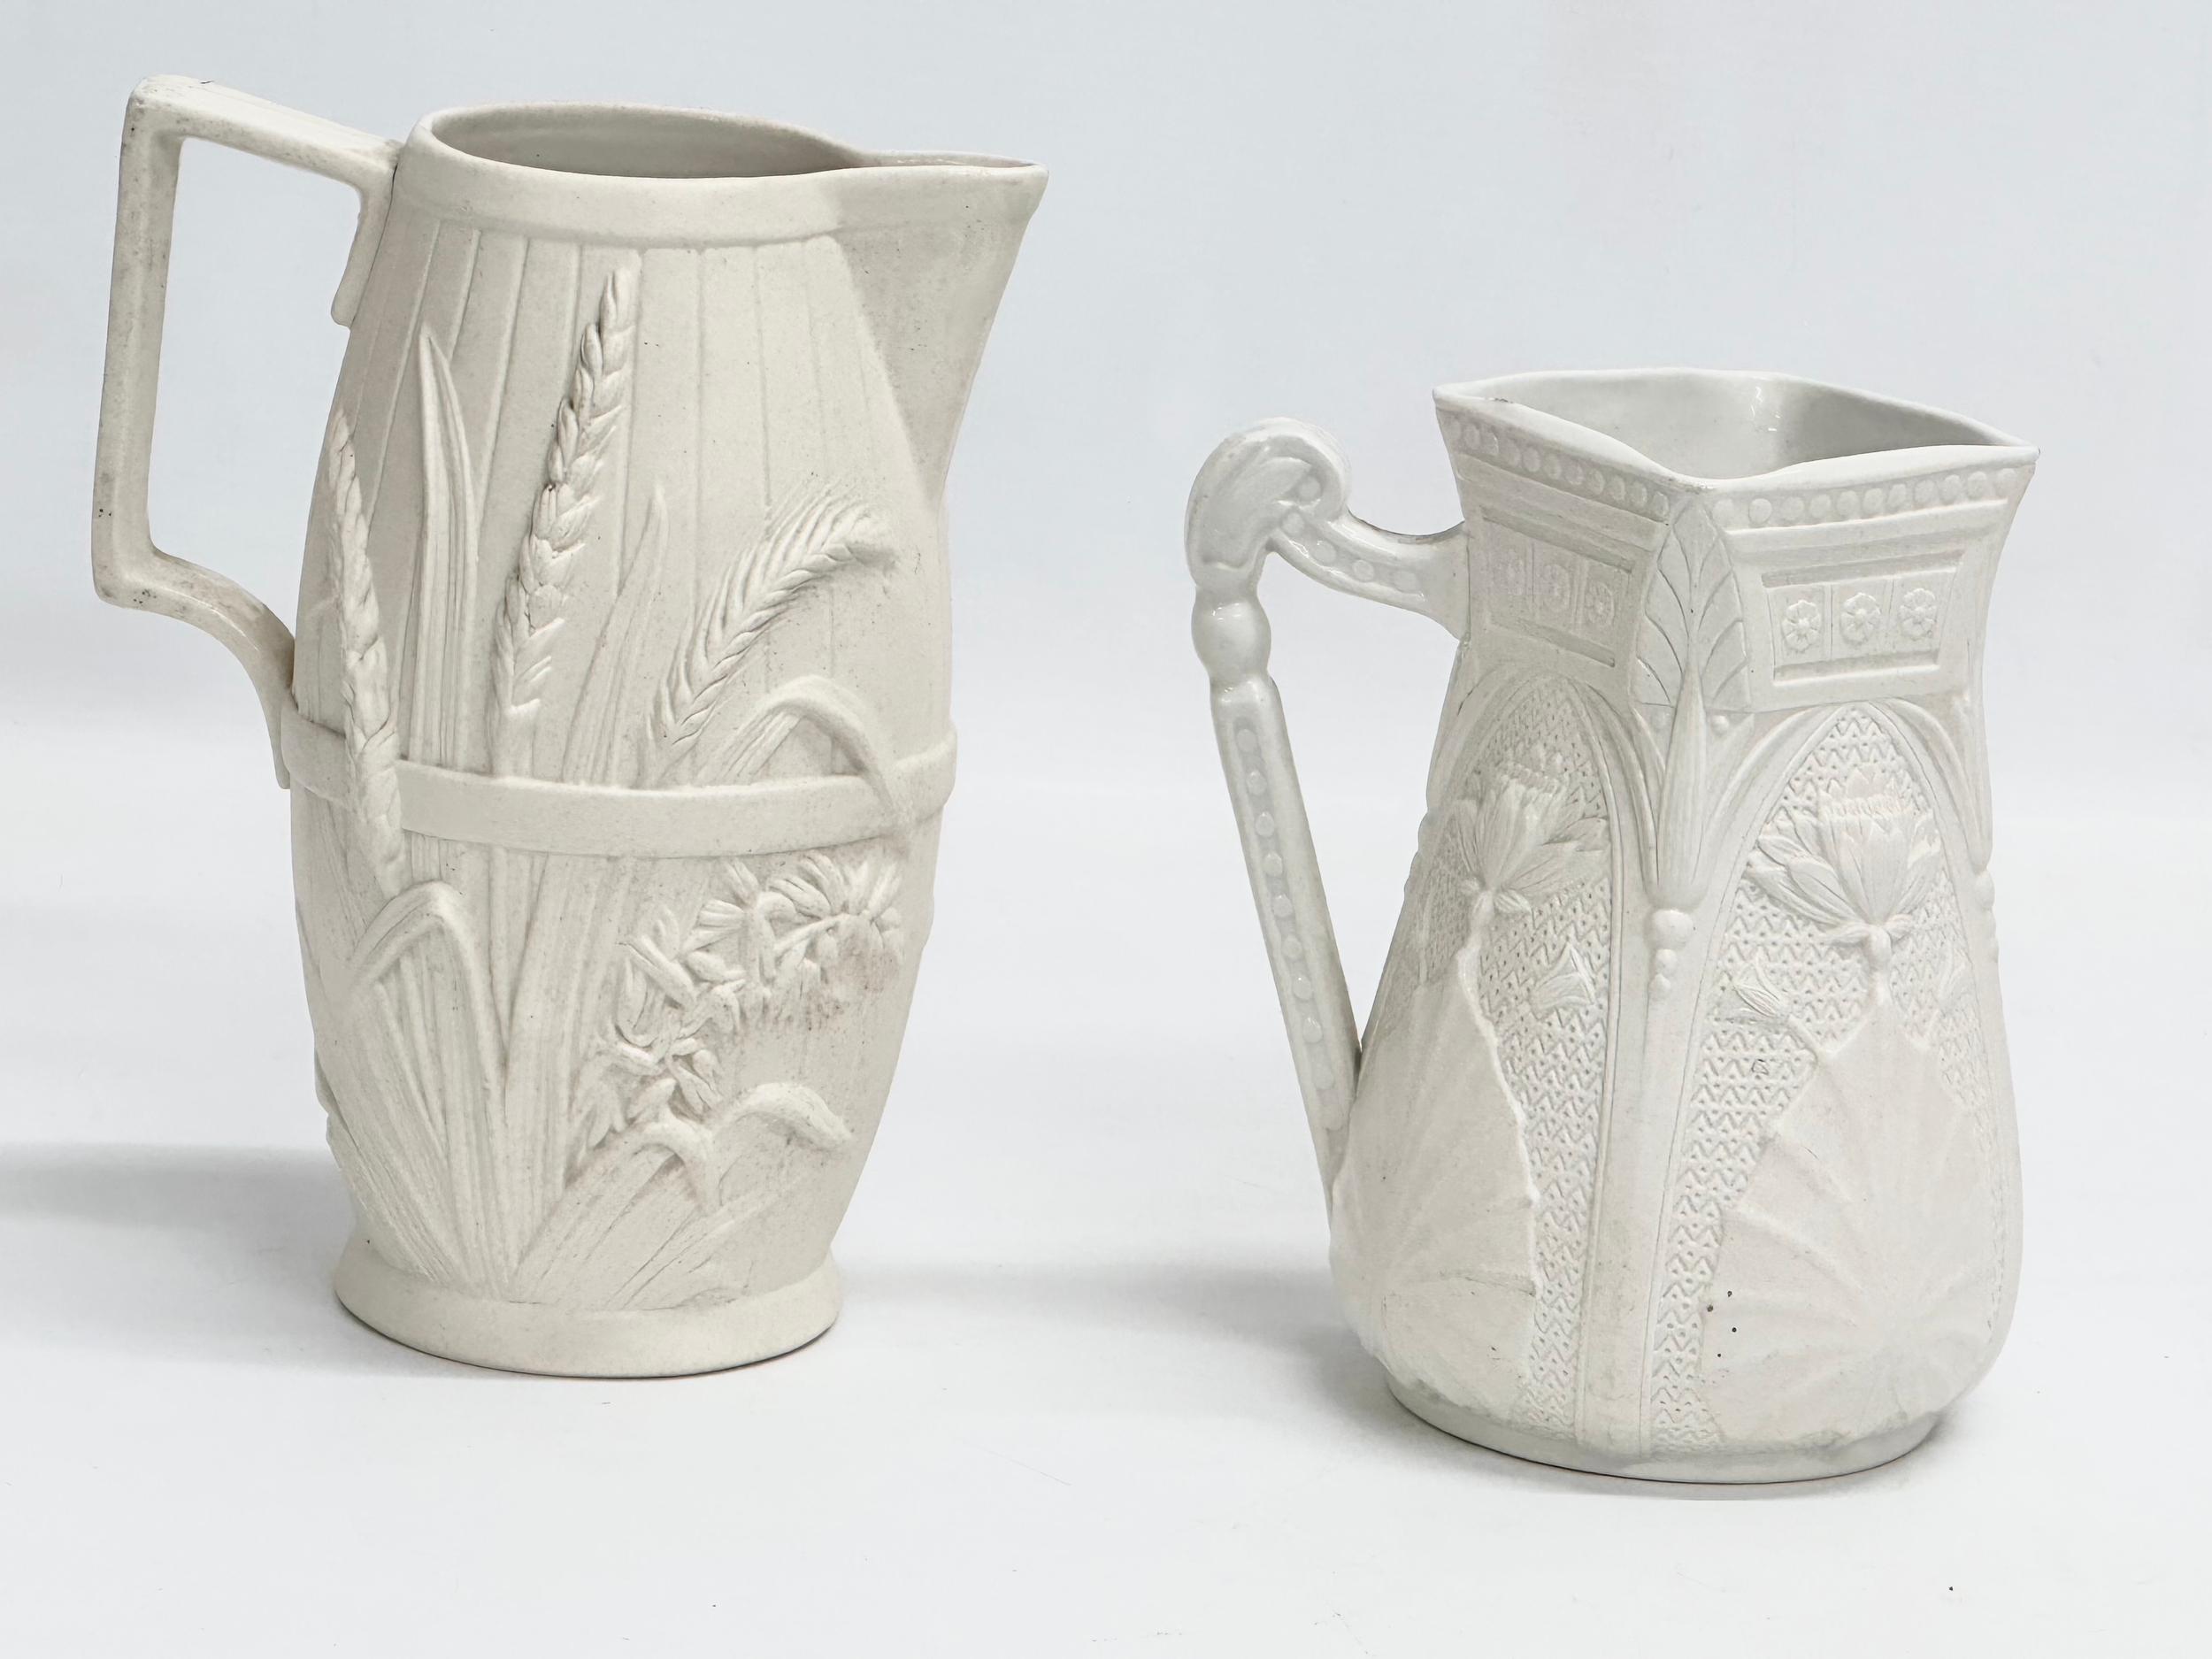 2 mid 19th century Copeland Parian Ware jugs. A Harvest Barrel jug 13x18cm. - Image 4 of 6